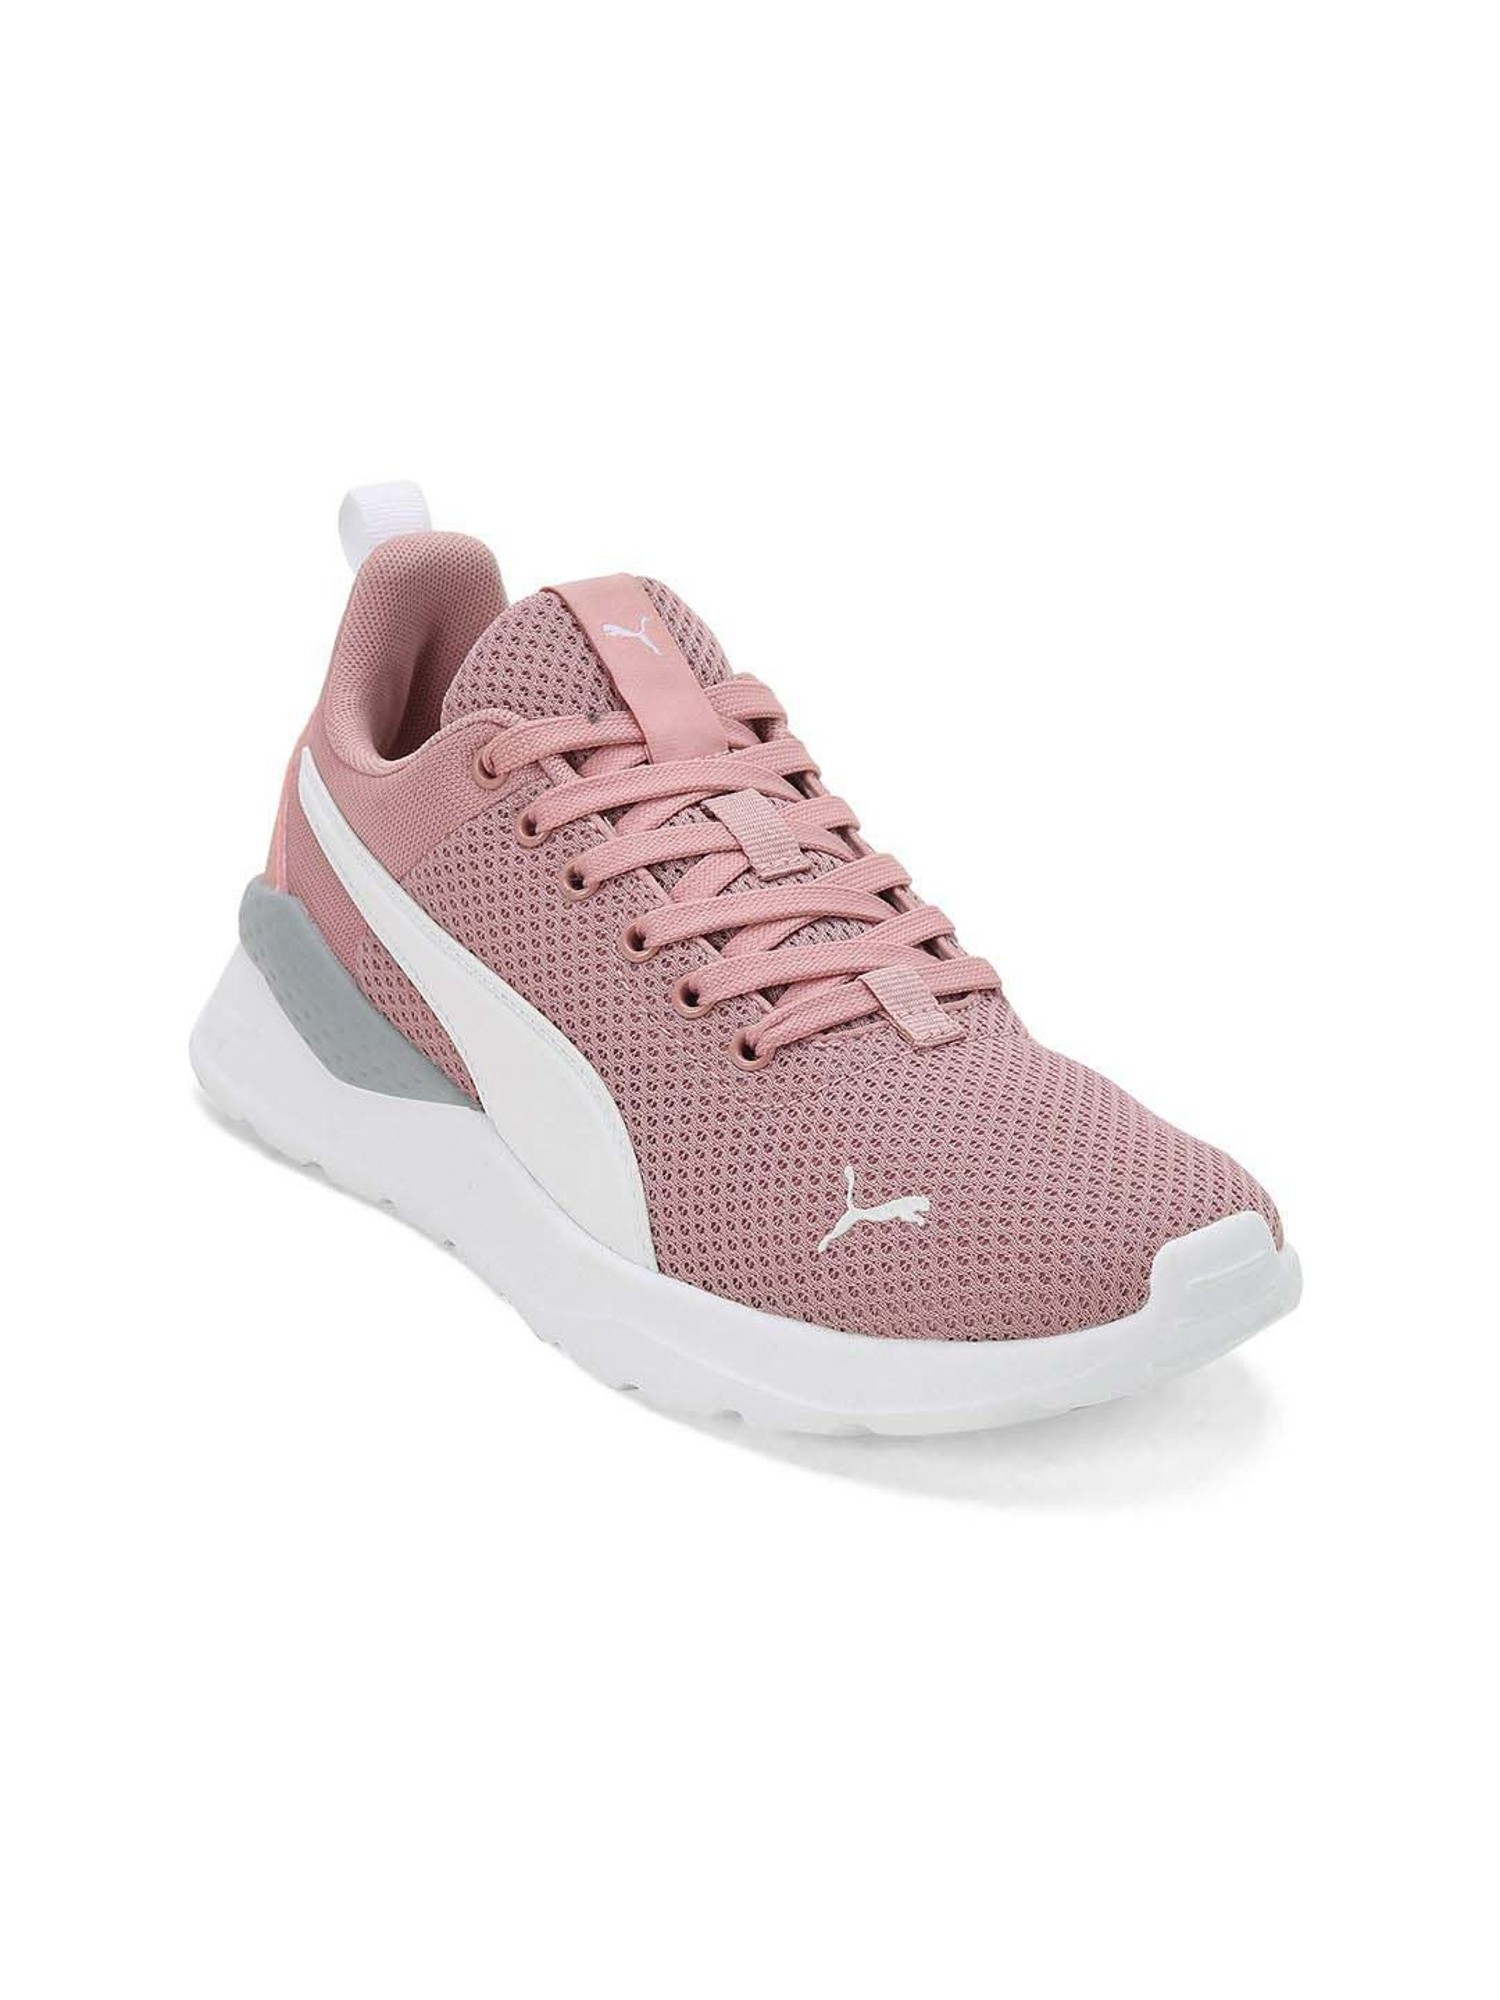 Puma Kids Anzarun Lite Pink & White Training Shoes